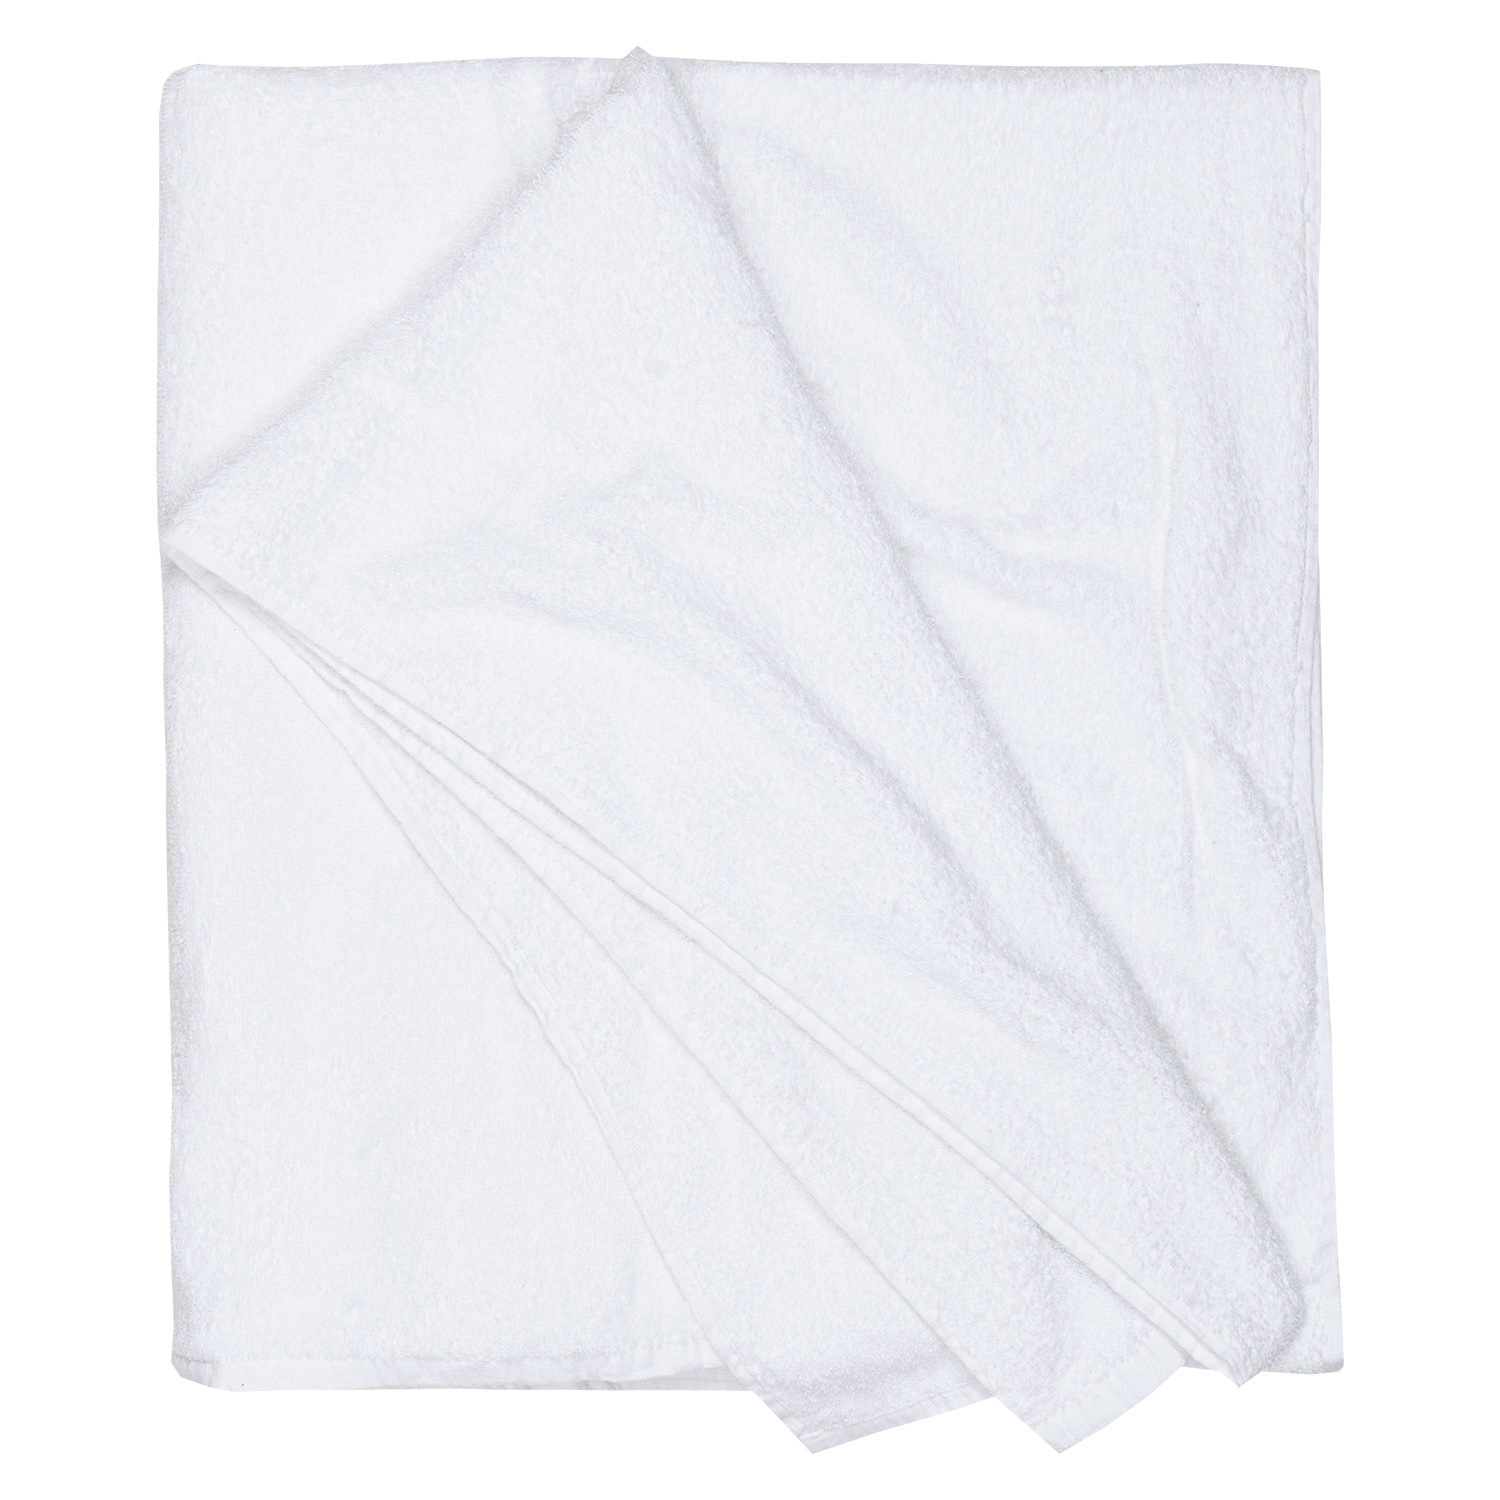 Bath towel series Helsinki in white by Adamo in large sizes 100x220 cm or 155x220 cm